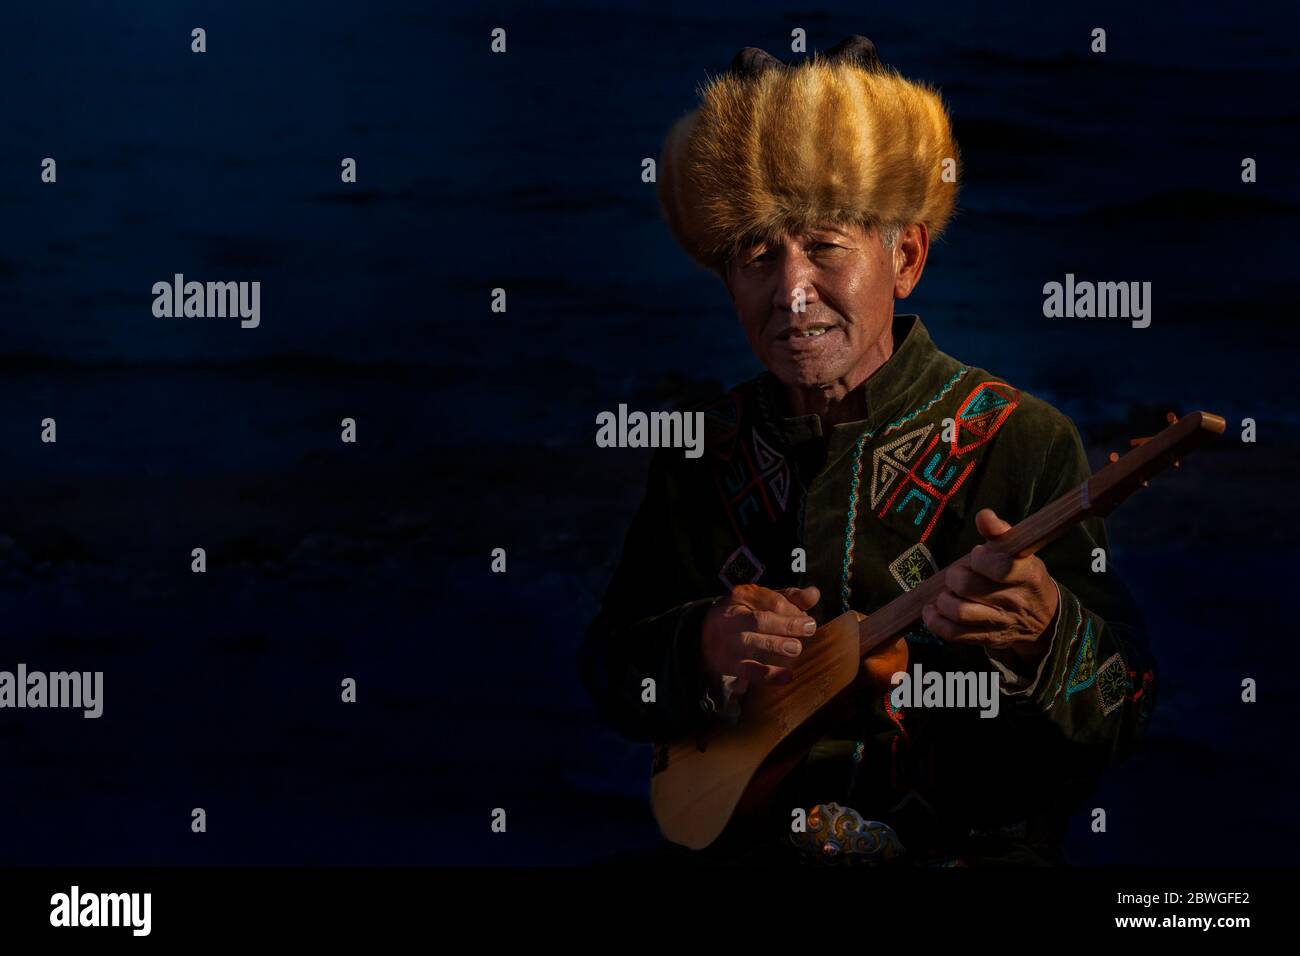 Local man playing traditional Kyrgyz musical instrument known as Komuz, in Issyk Kul Lake, Kyrgyzstan Stock Photo